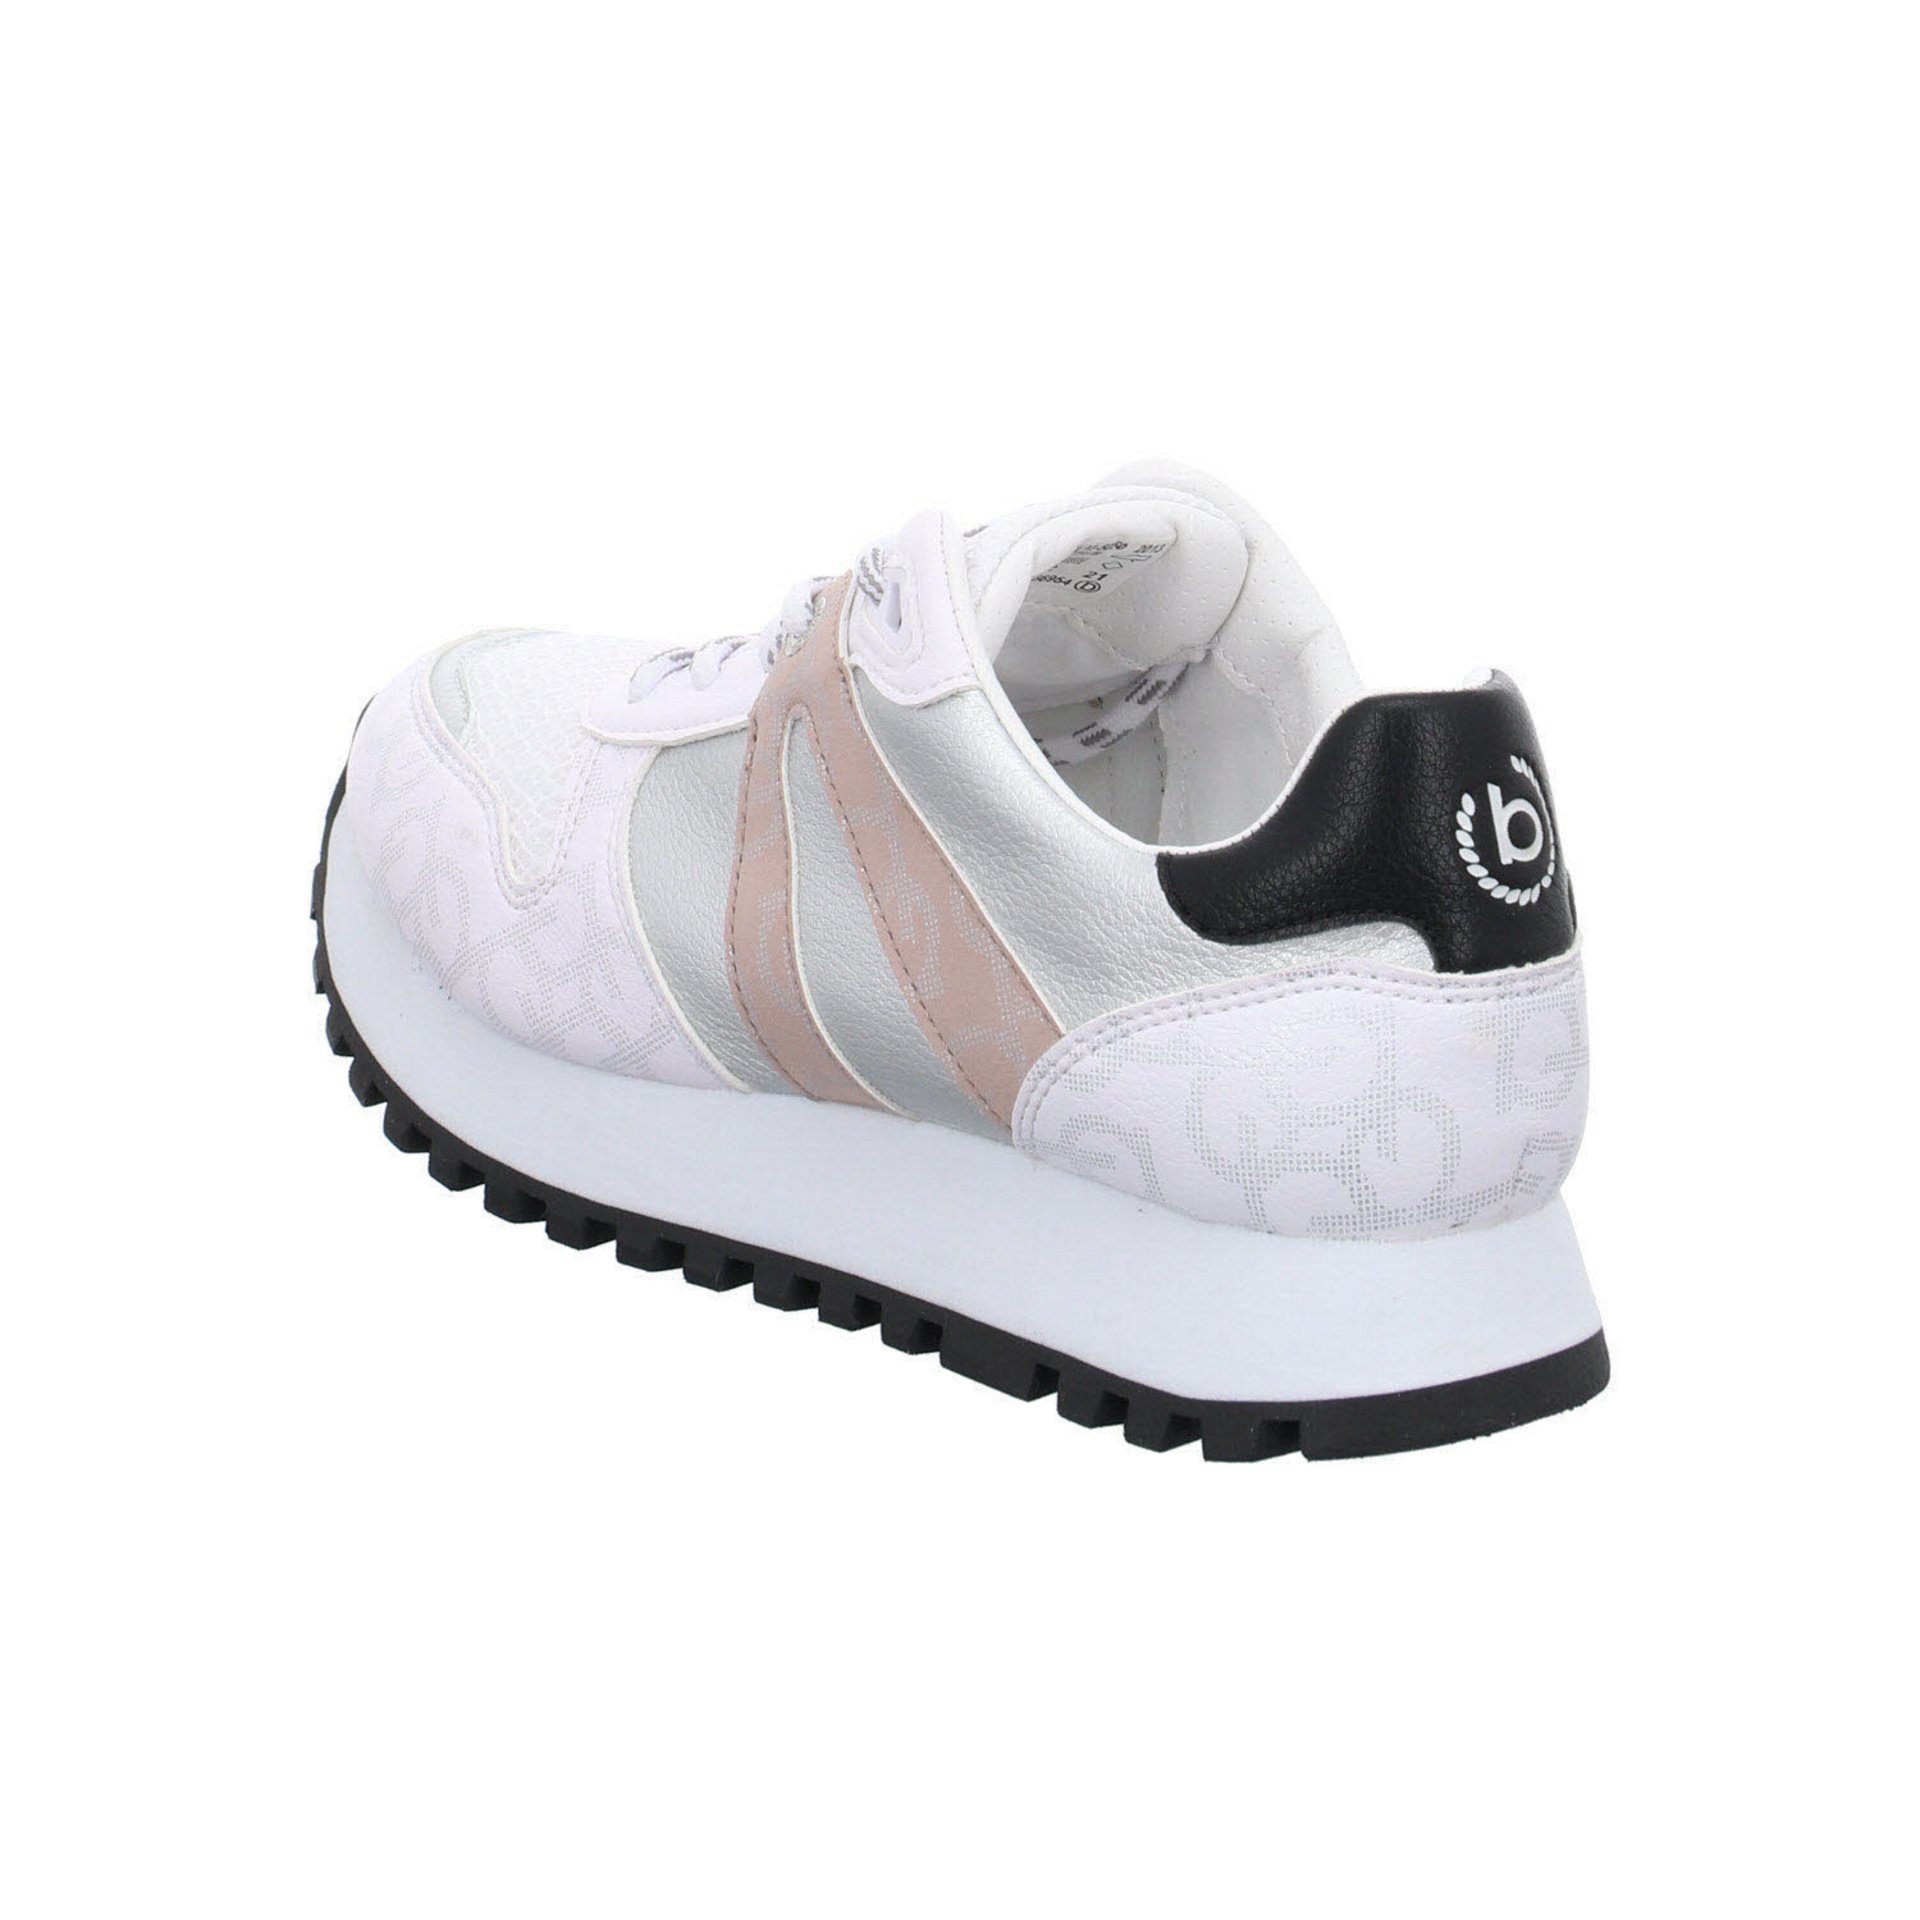 Siena Schuhe Leder-/Textilkombination white Schnürschuh bugatti / Damen Sneaker silver Sneaker